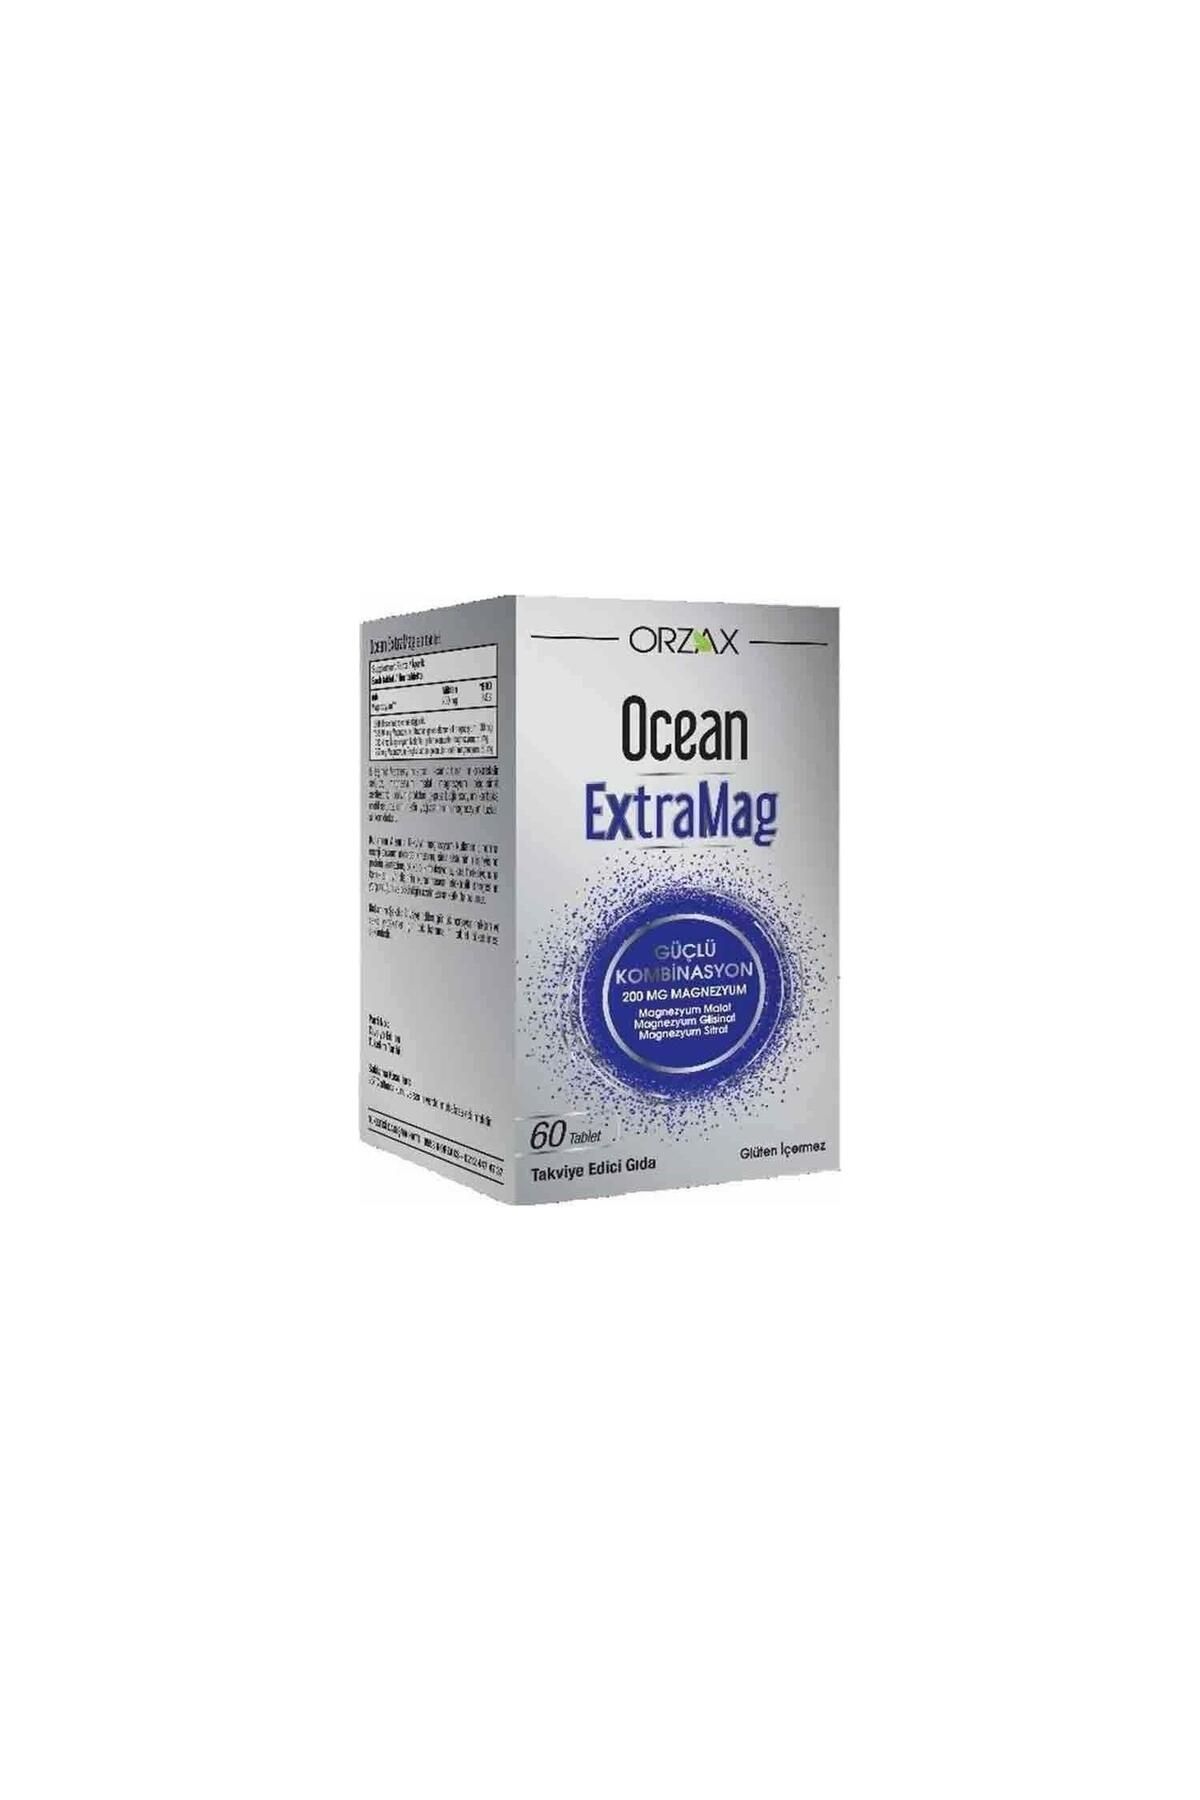 Ocean Extramag 200 Mg 60 Tablet